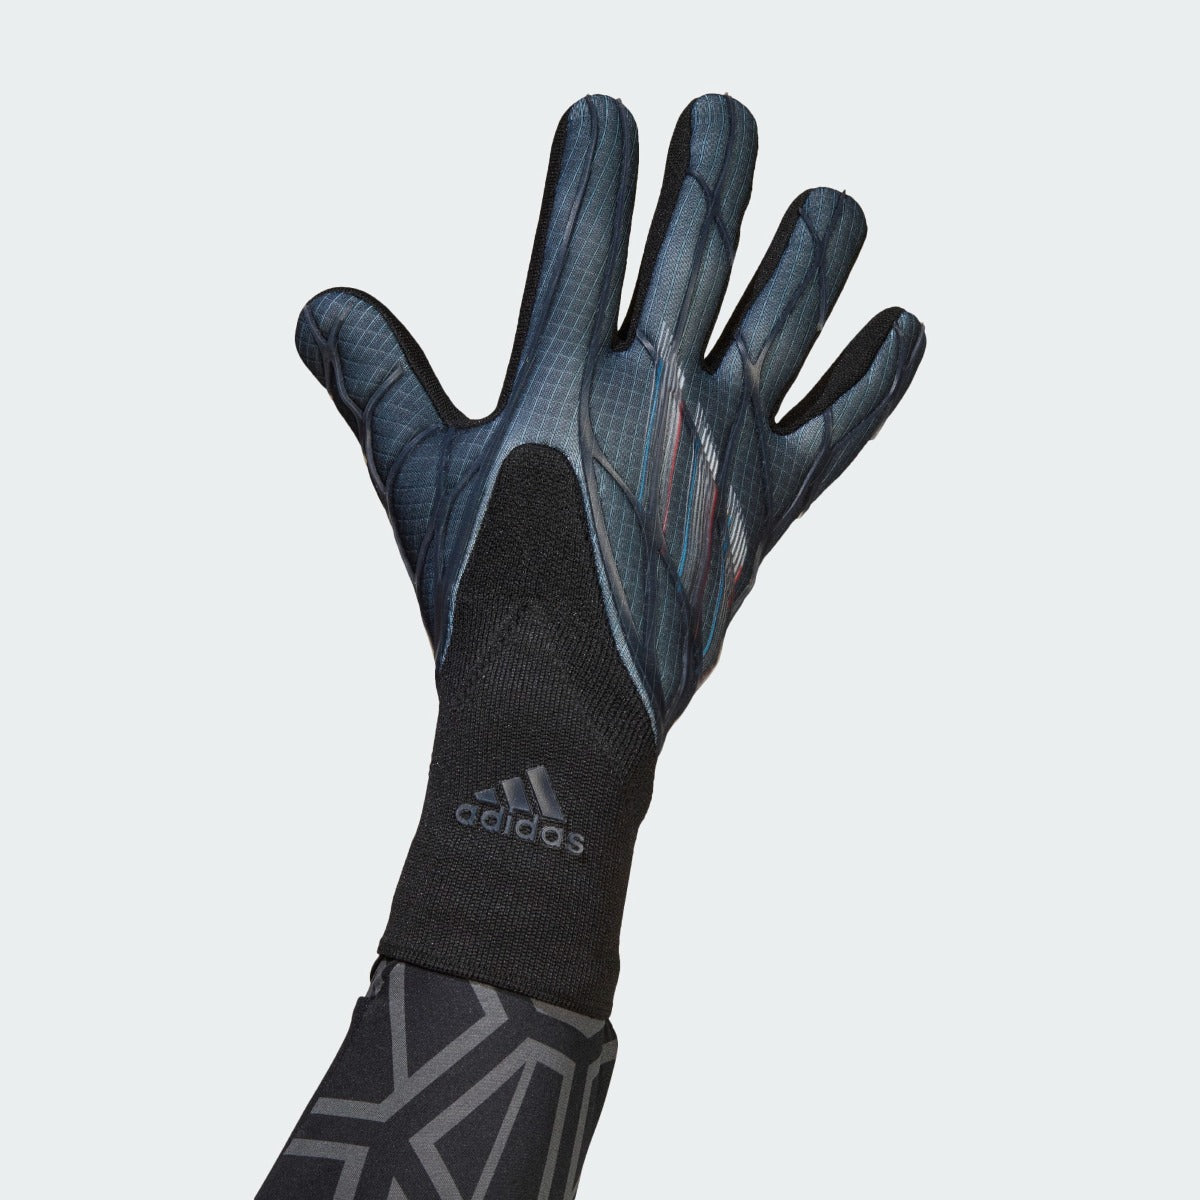 Adidas X Pro Goalkeeper Gloves - Black-Blue Rush (Single - Outer)